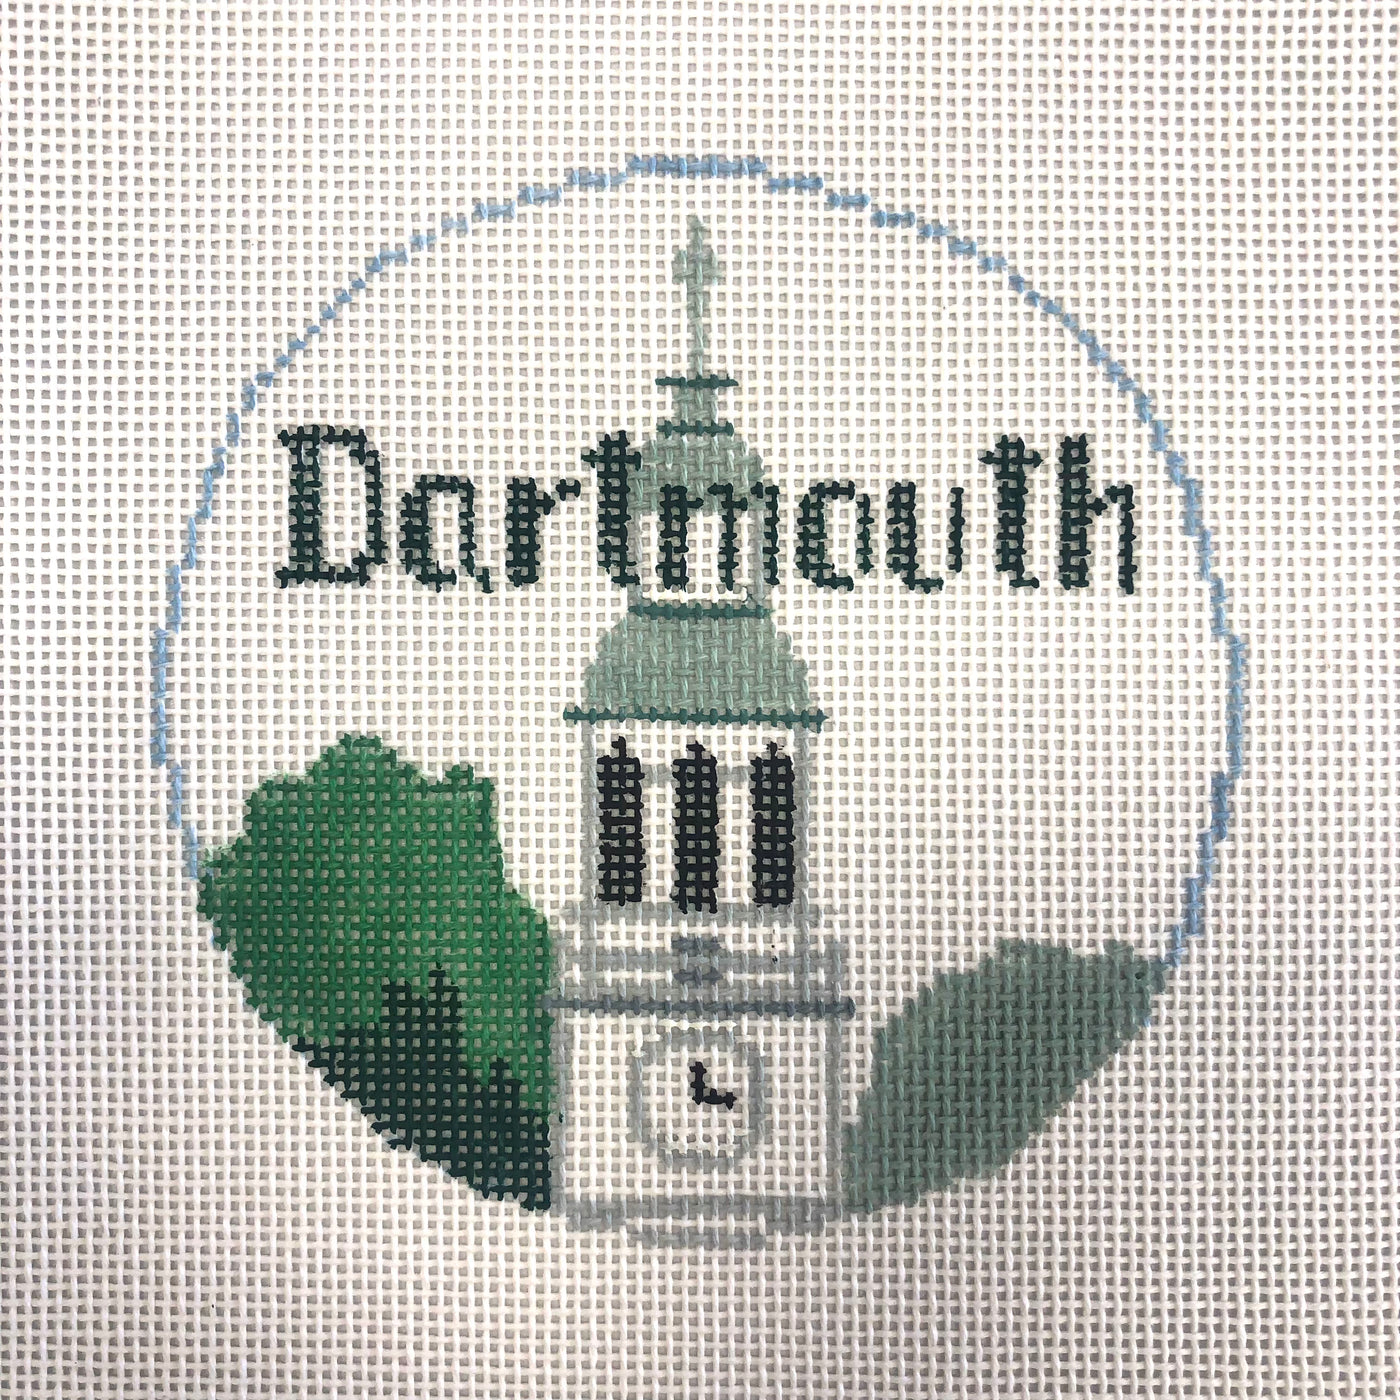 Dartmouth University Round Ornament Needlepoint Canvas